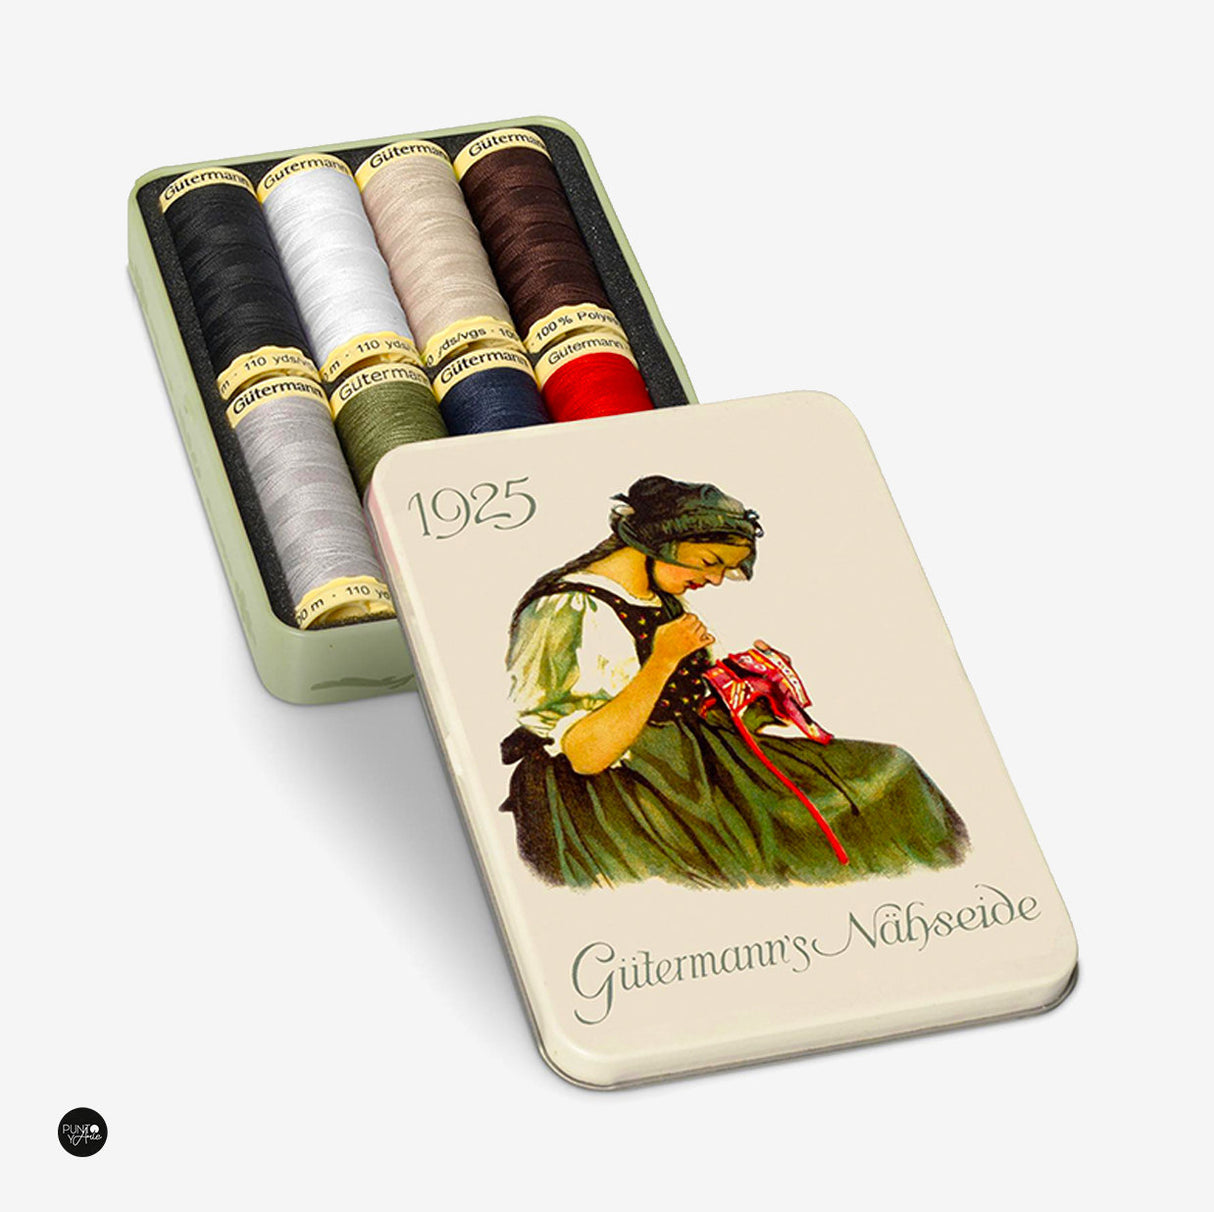 NOSTALGIE Vintage Sew-all Box 1925 Gütermann 640950